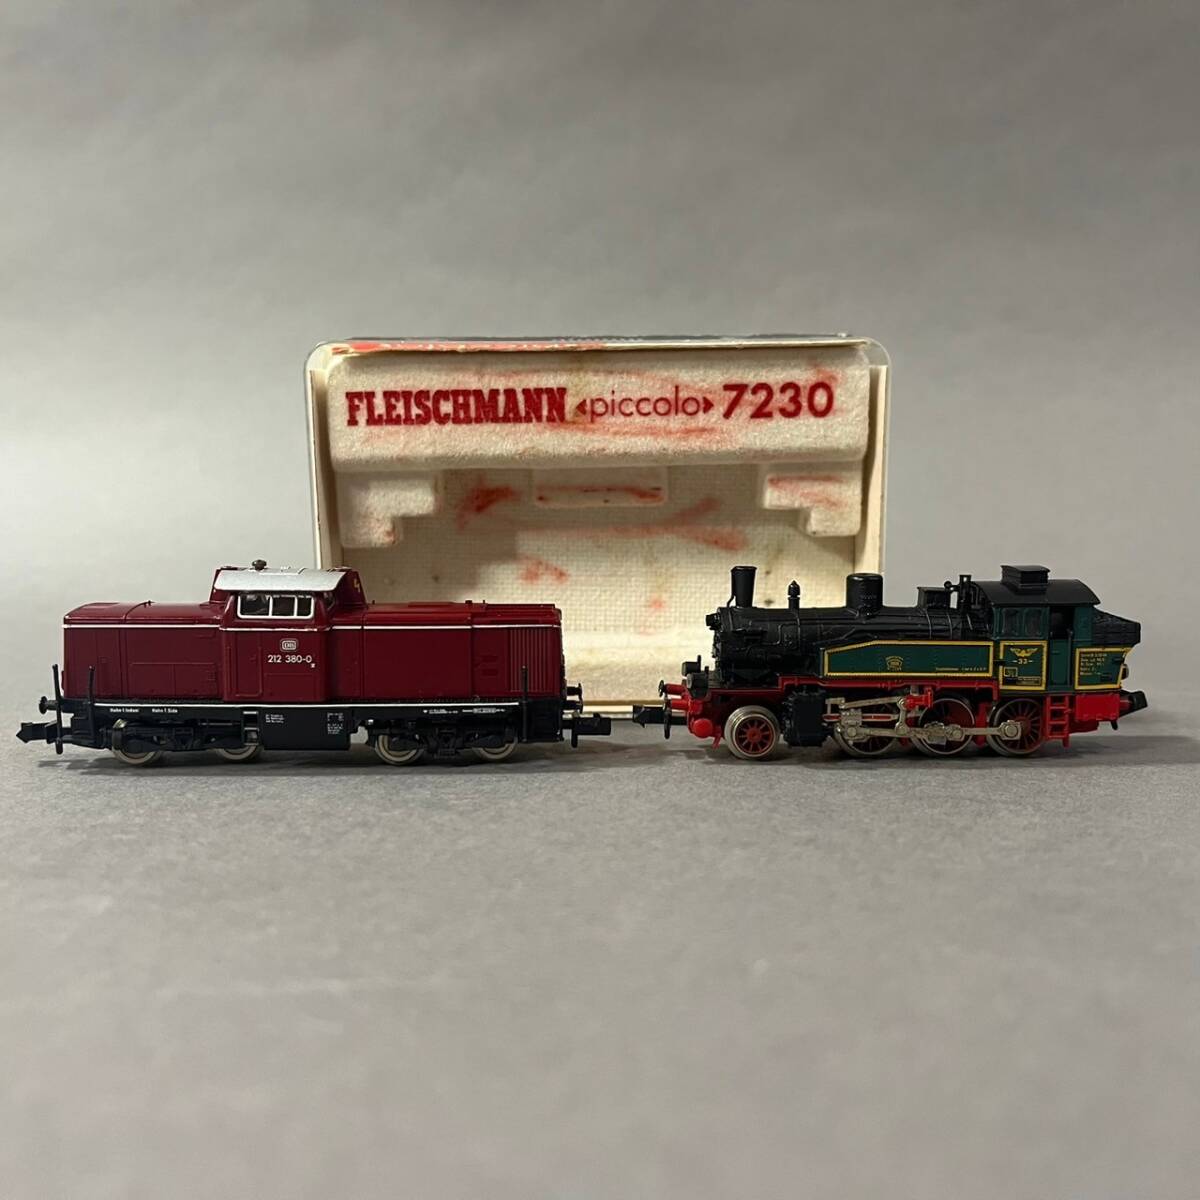 RS233 FLEISCHMANN Piccolo フライシュマン ピッコロ 7230と7030 車両 2点 まとめて Nゲージ 鉄道模型 蒸気機関車 ディーゼル機関車の画像1